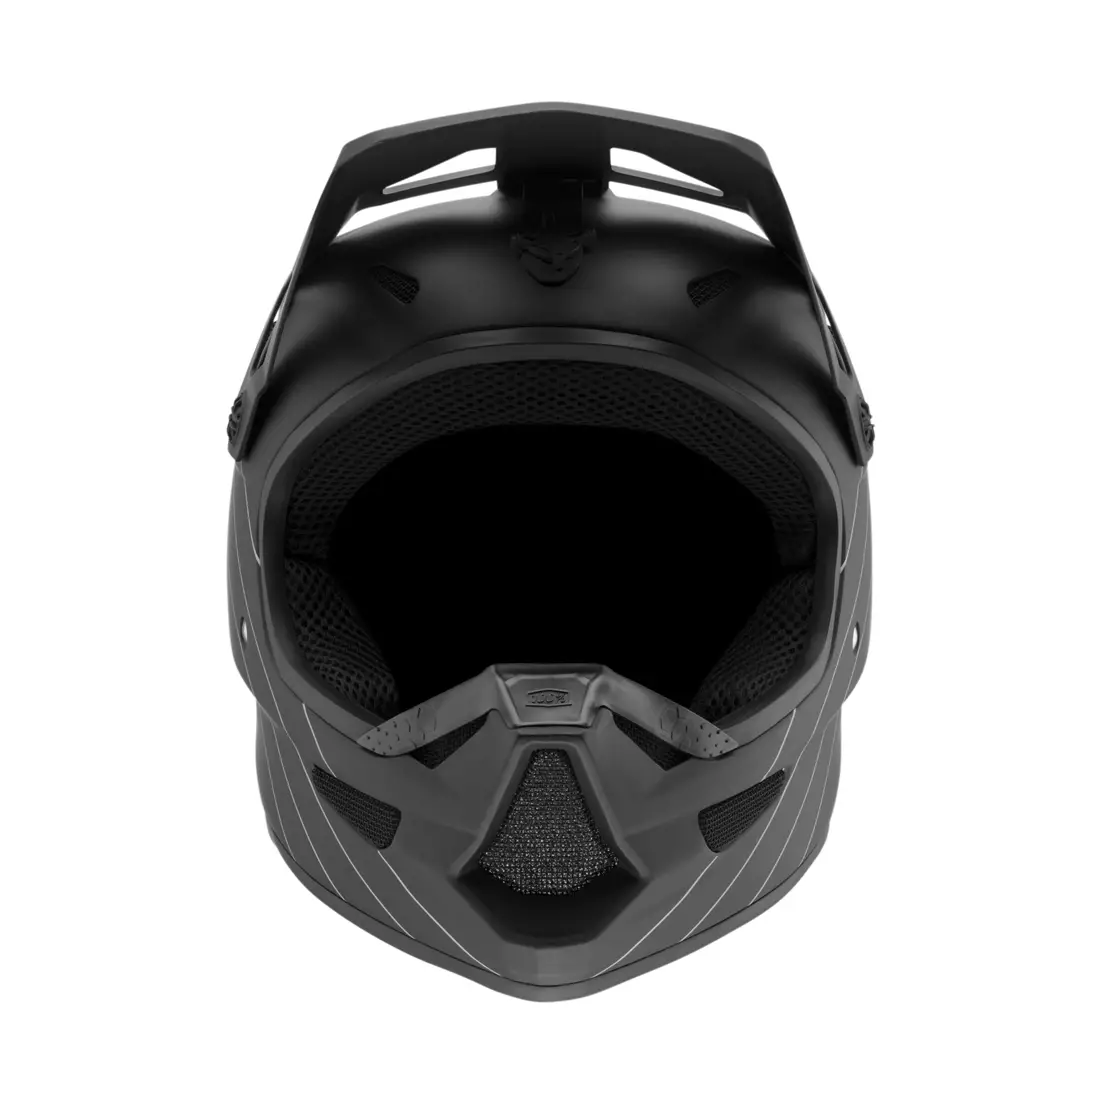 100% cyklistická prilba full face STATUS DH/BMX Helmet Essential black STO-80011-001-09